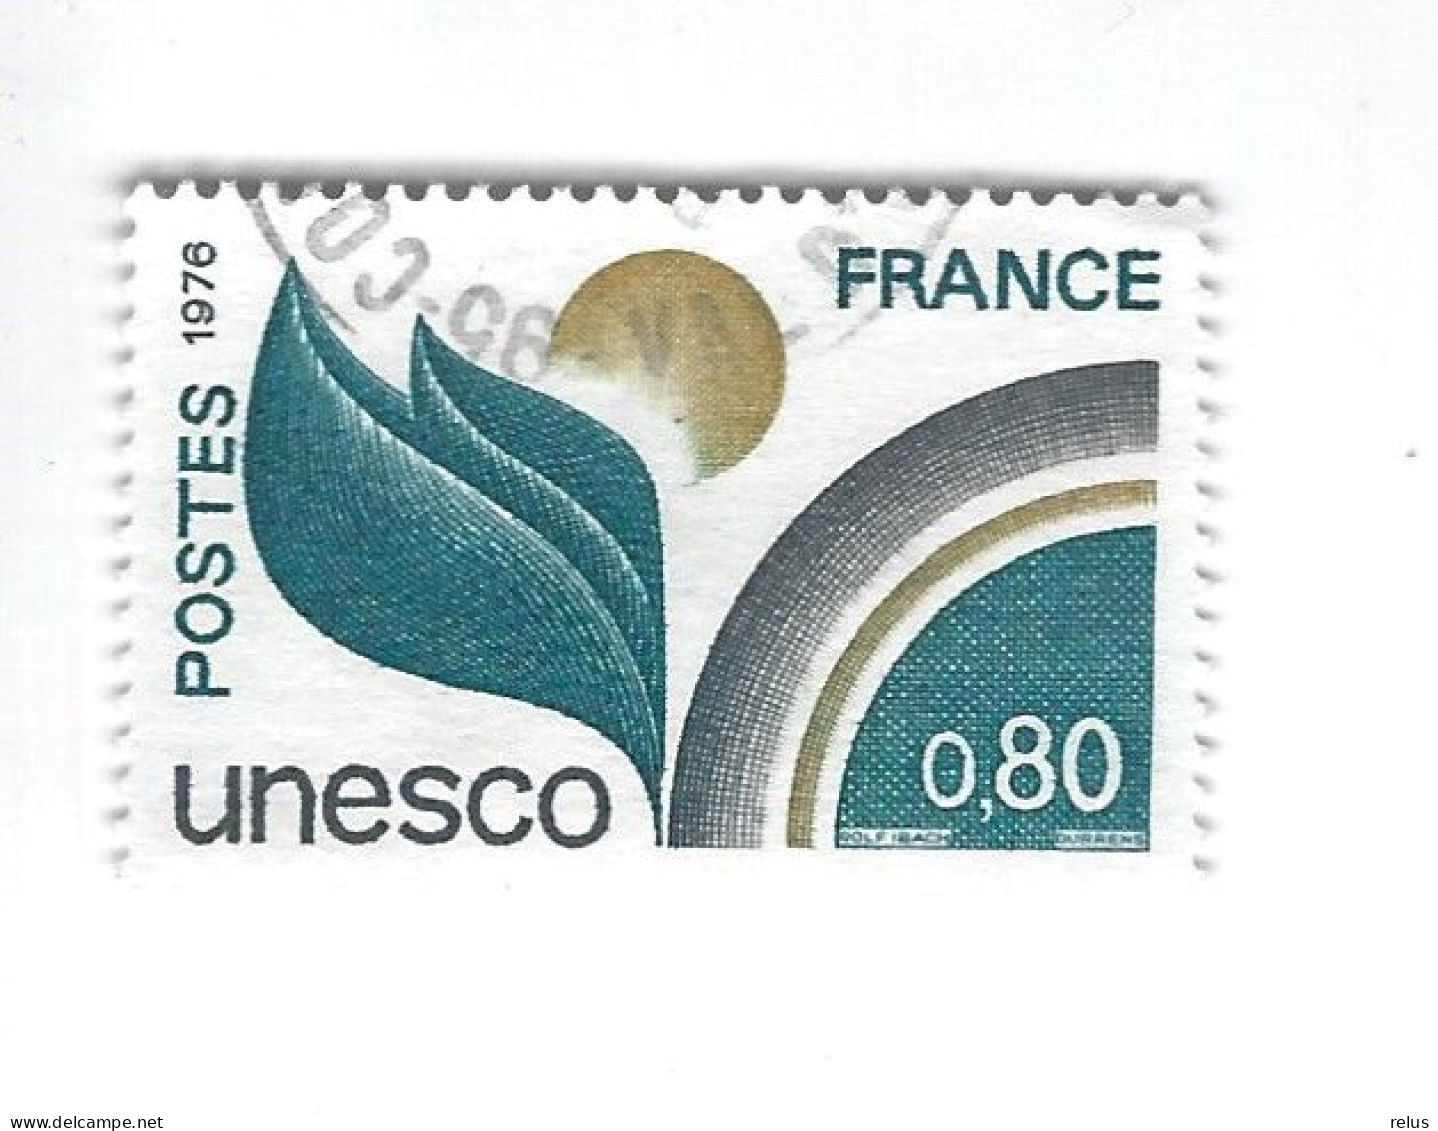 TS N° 50 UNESCO  Oblitéré 1976 - Usati